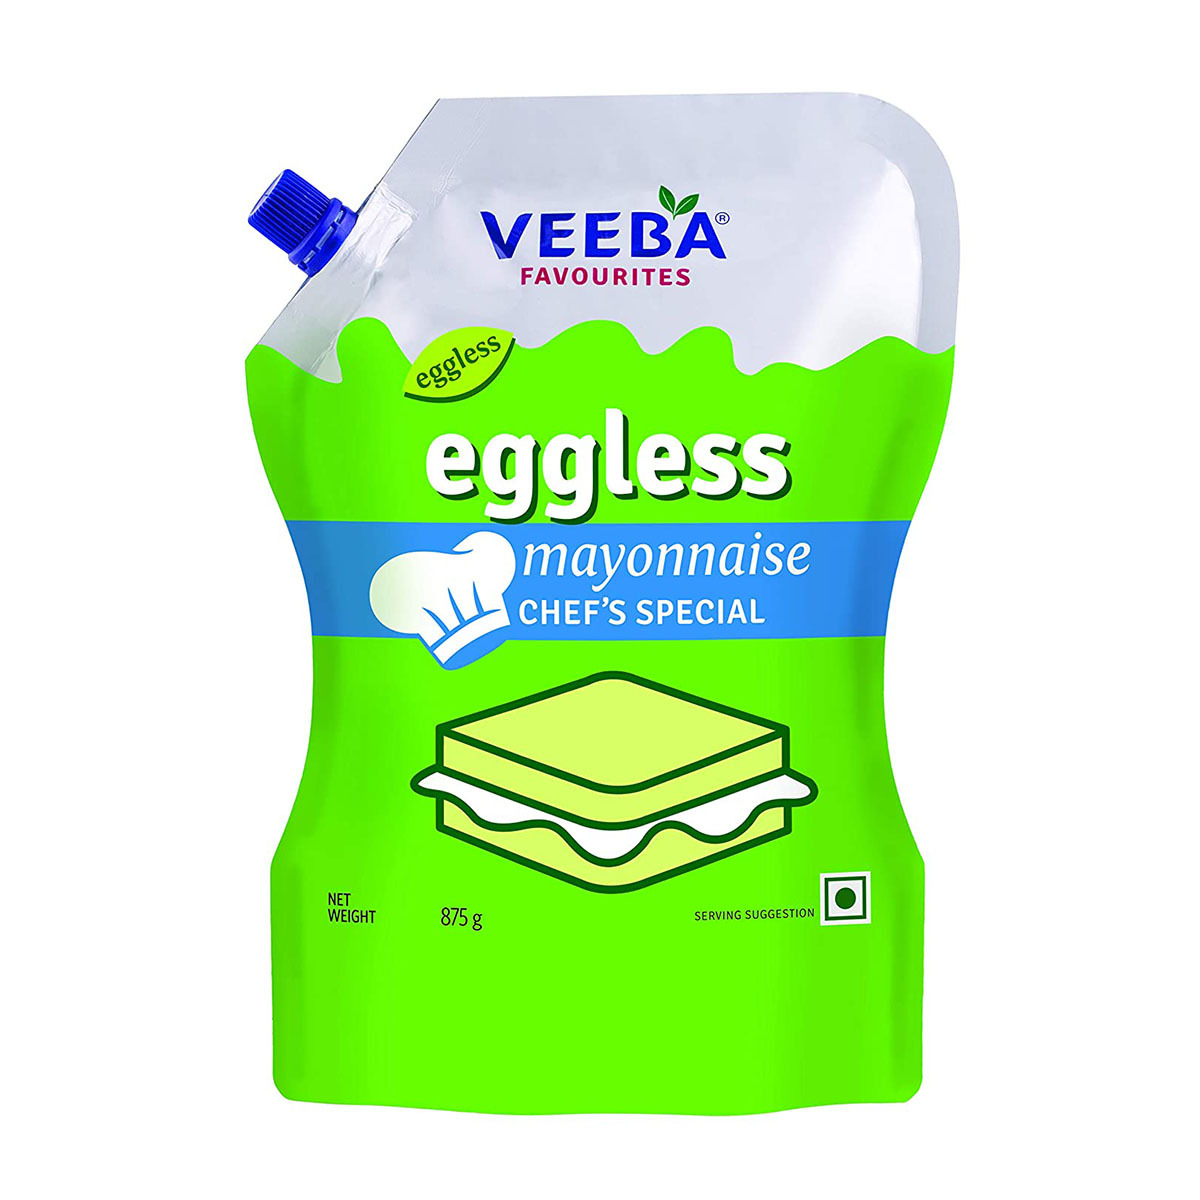 Veeba Eggless Mayonnaise 875g